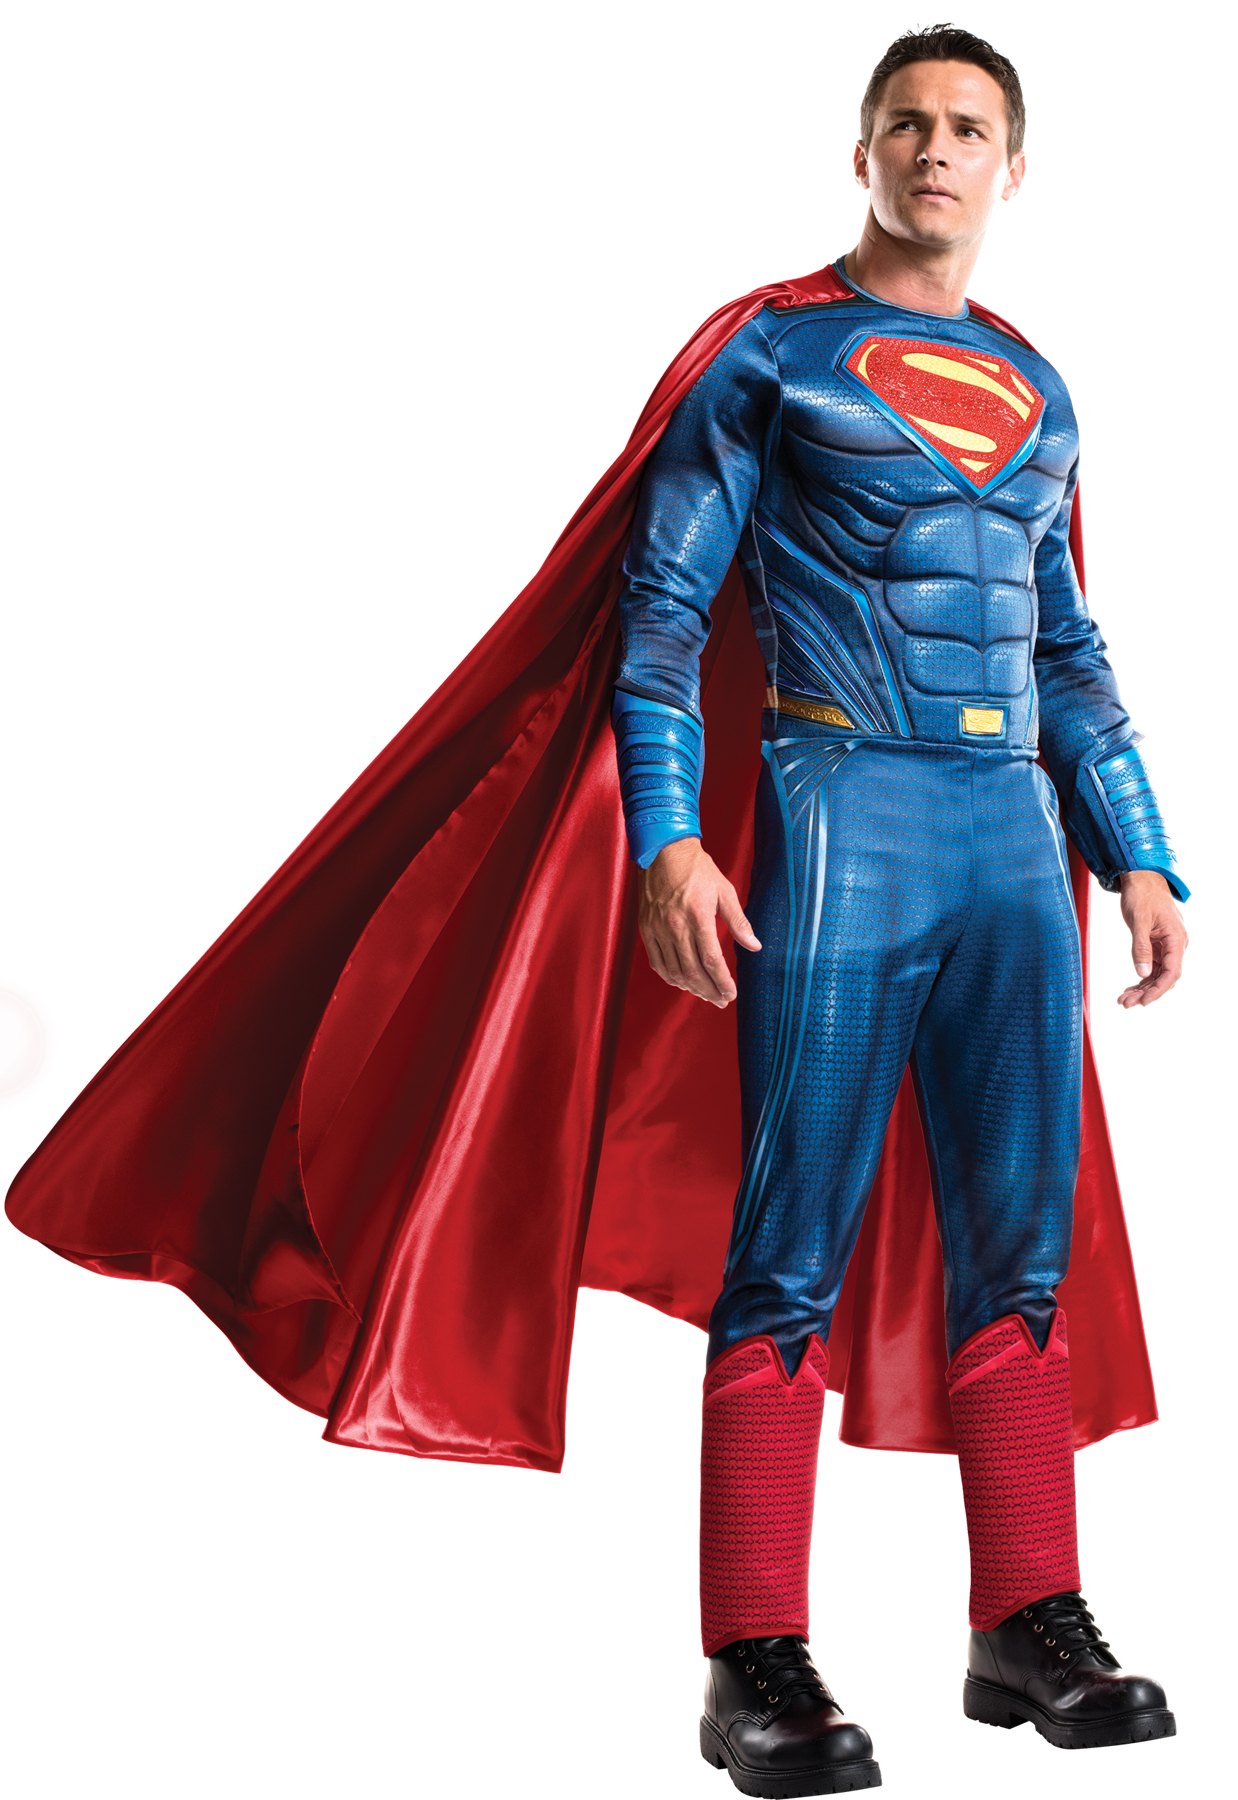 DOJ SUPERMAN GRAND HERITAGE XL